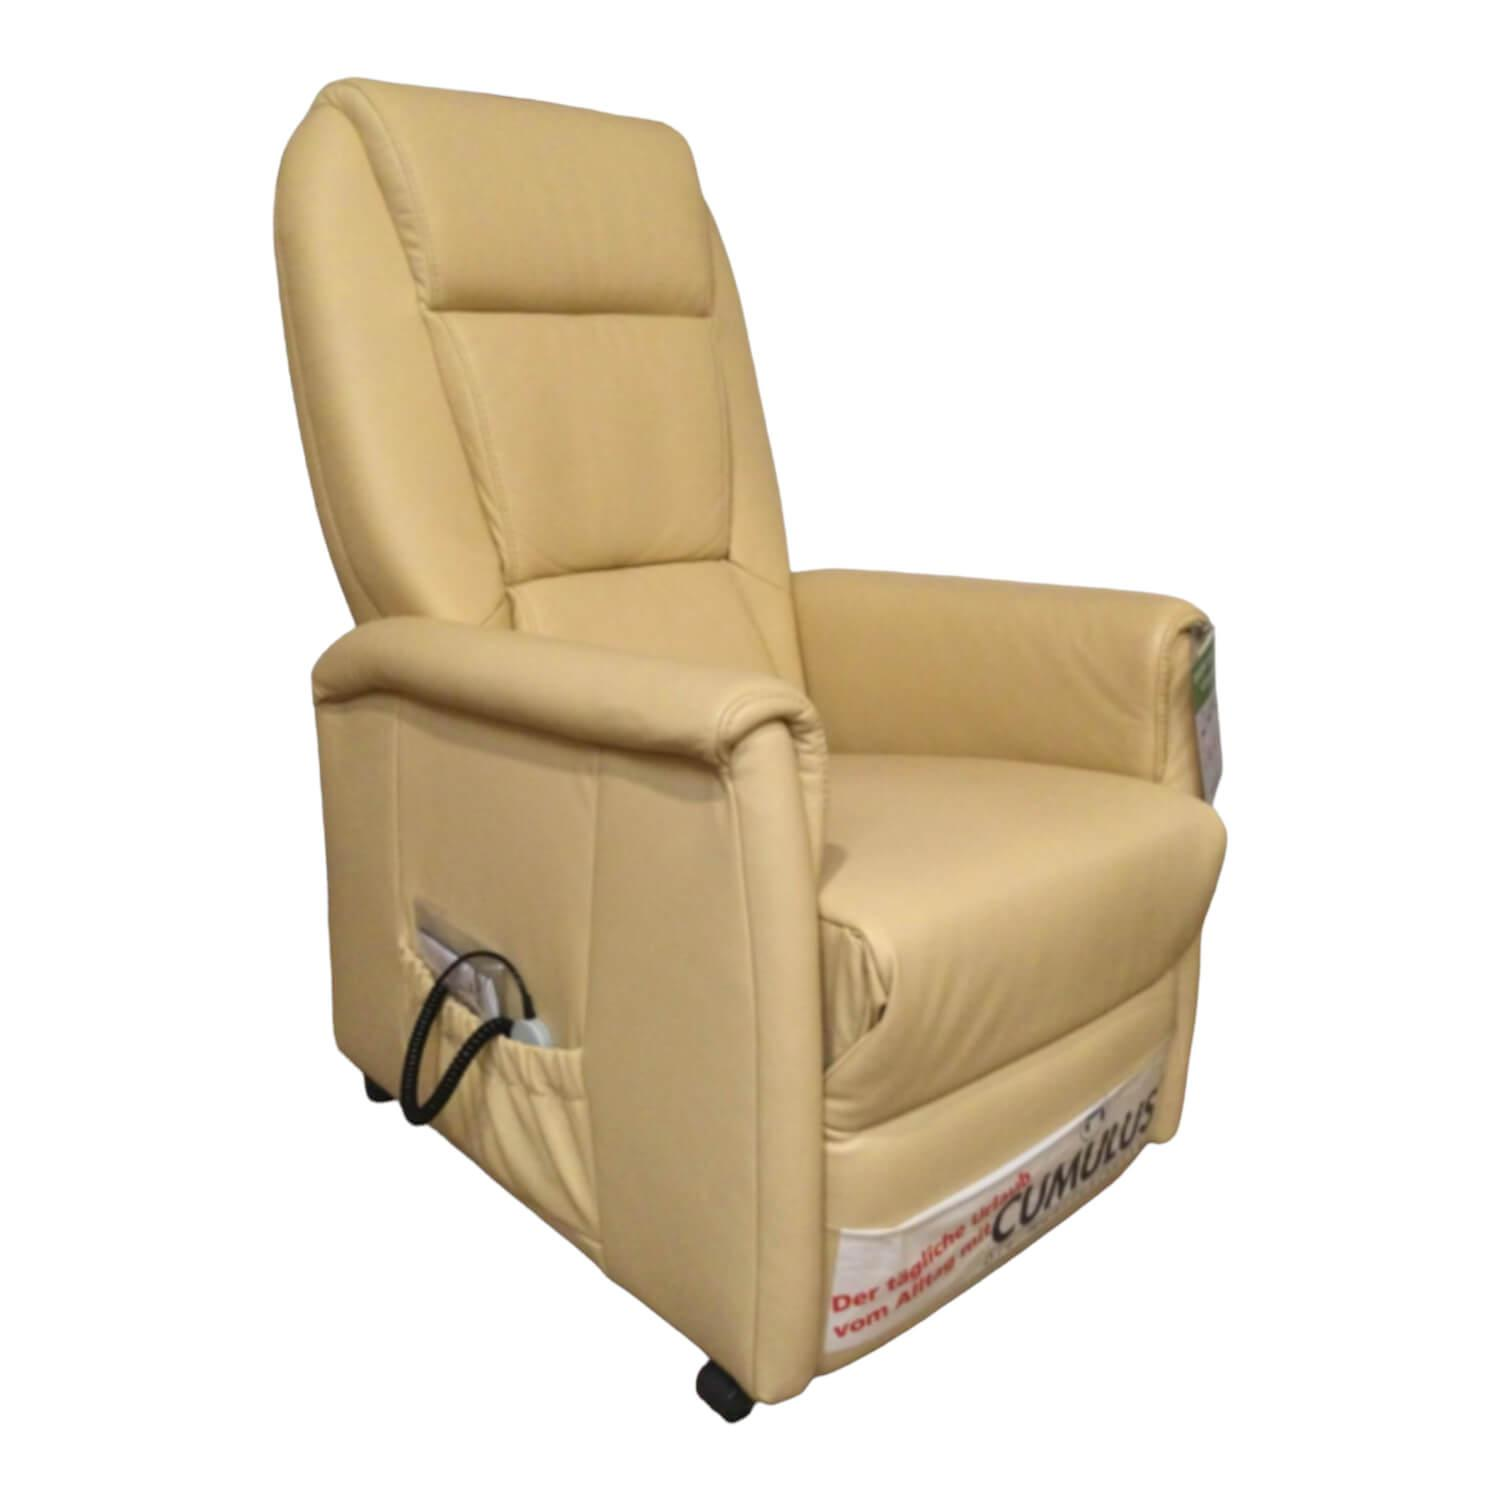 Massage-Sessel 9873 Bezug Leder LongLife Balsa Mit Kunststoffrollen Schwarz Und Relaxfunktion